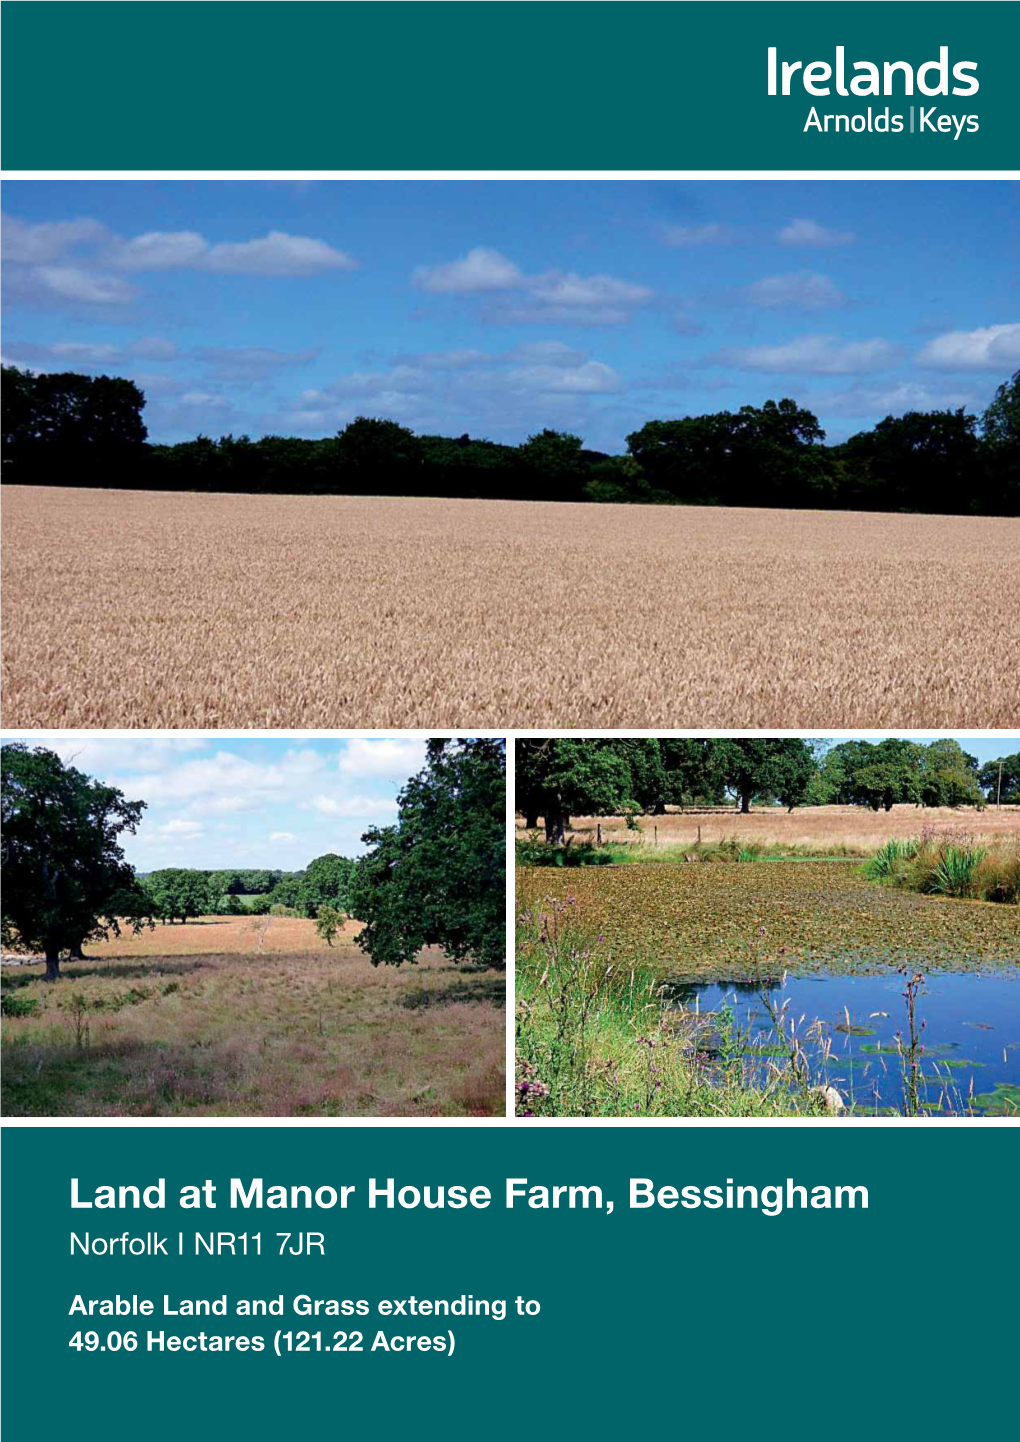 Land at Manor House Farm, Bessingham Norfolk I NR11 7JR